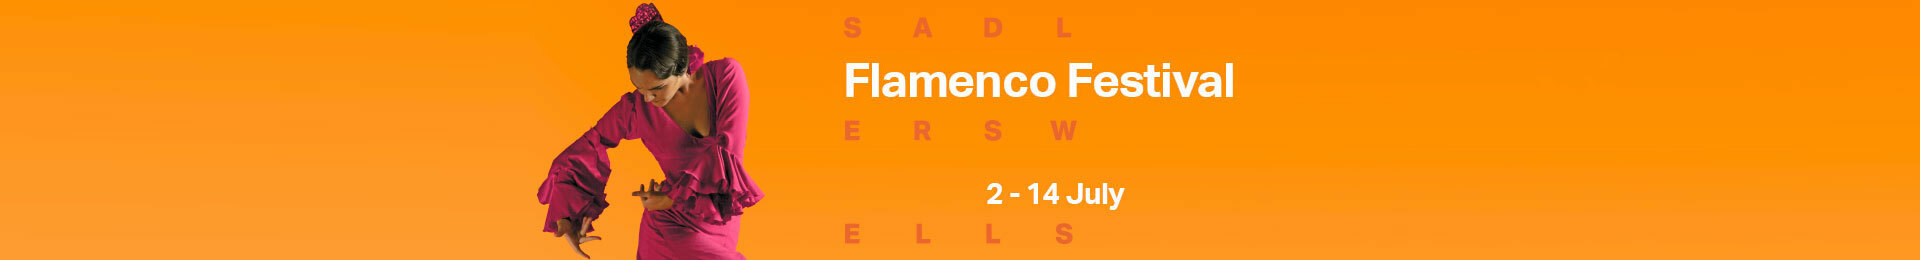 Flamenco Festival: Tim Ries, David Peña Dorantes & Adam Ben Ezra banner image